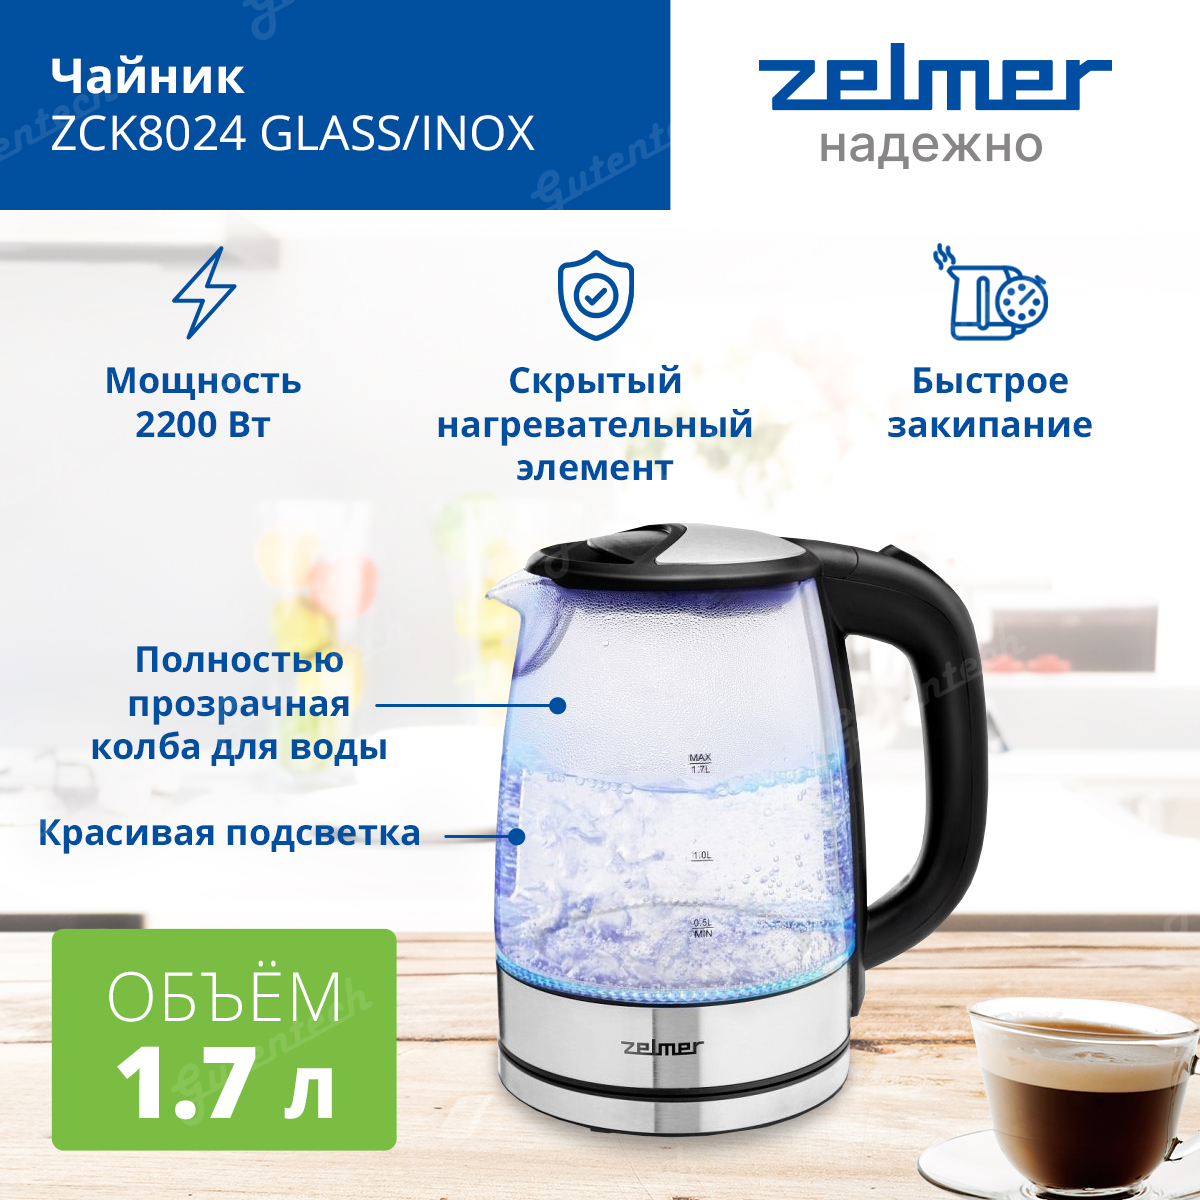 Сд ек. Zelmer Crystal чайник. Электрочайники Зелмер 850. Чайник Zelmer zck8024. Zelmer ZCK 8024 Glass/inox.